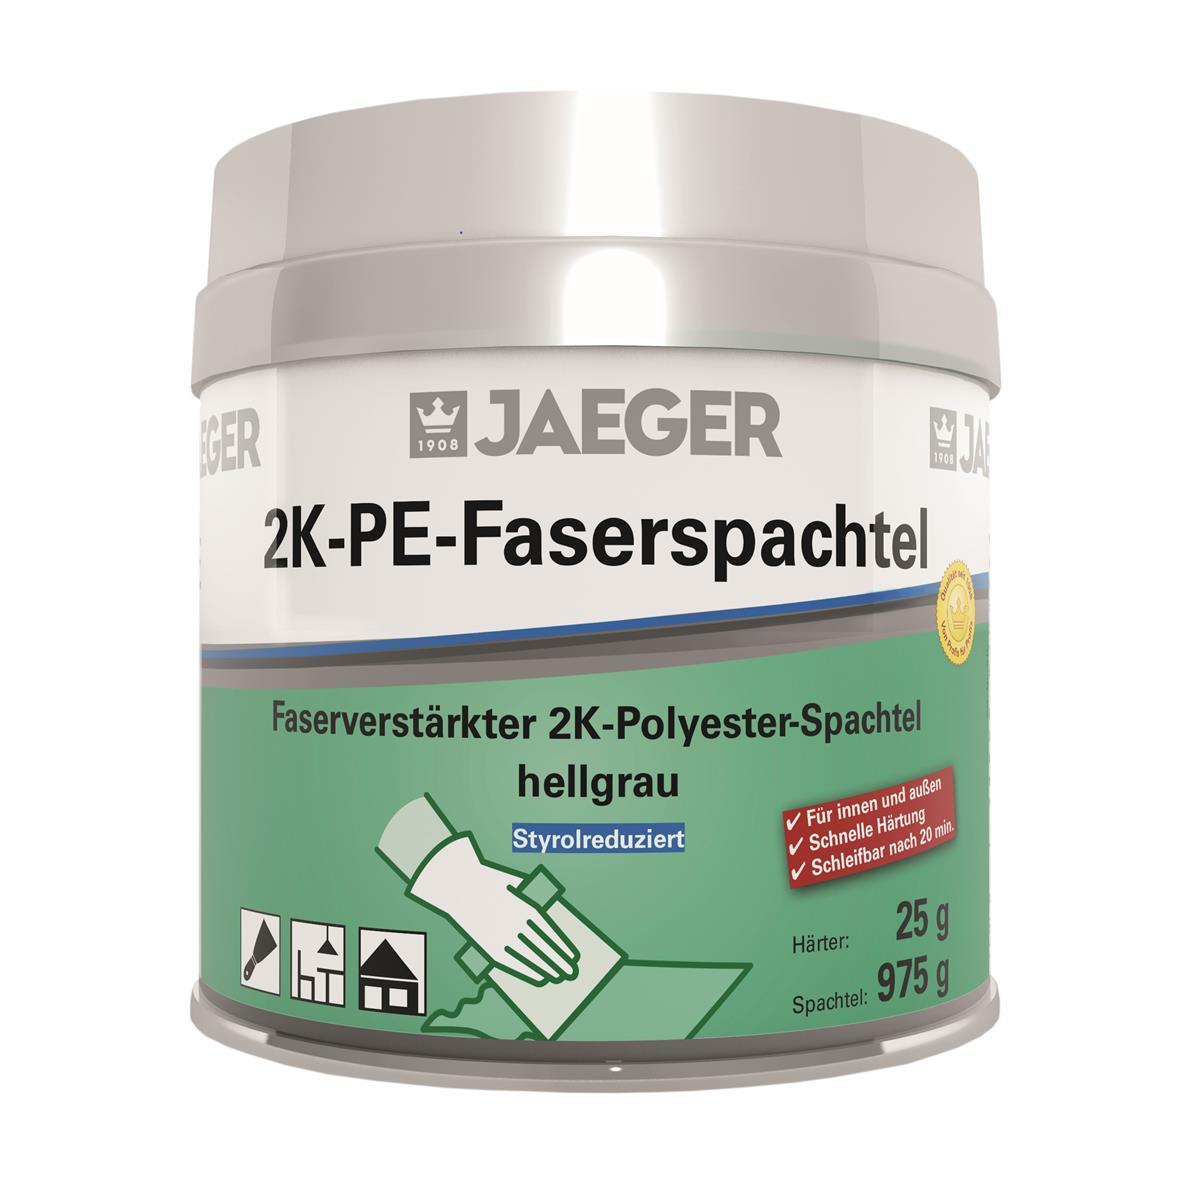 Jaeger 415 Kronen® 2K-PE-Faserspachtel - 250 g